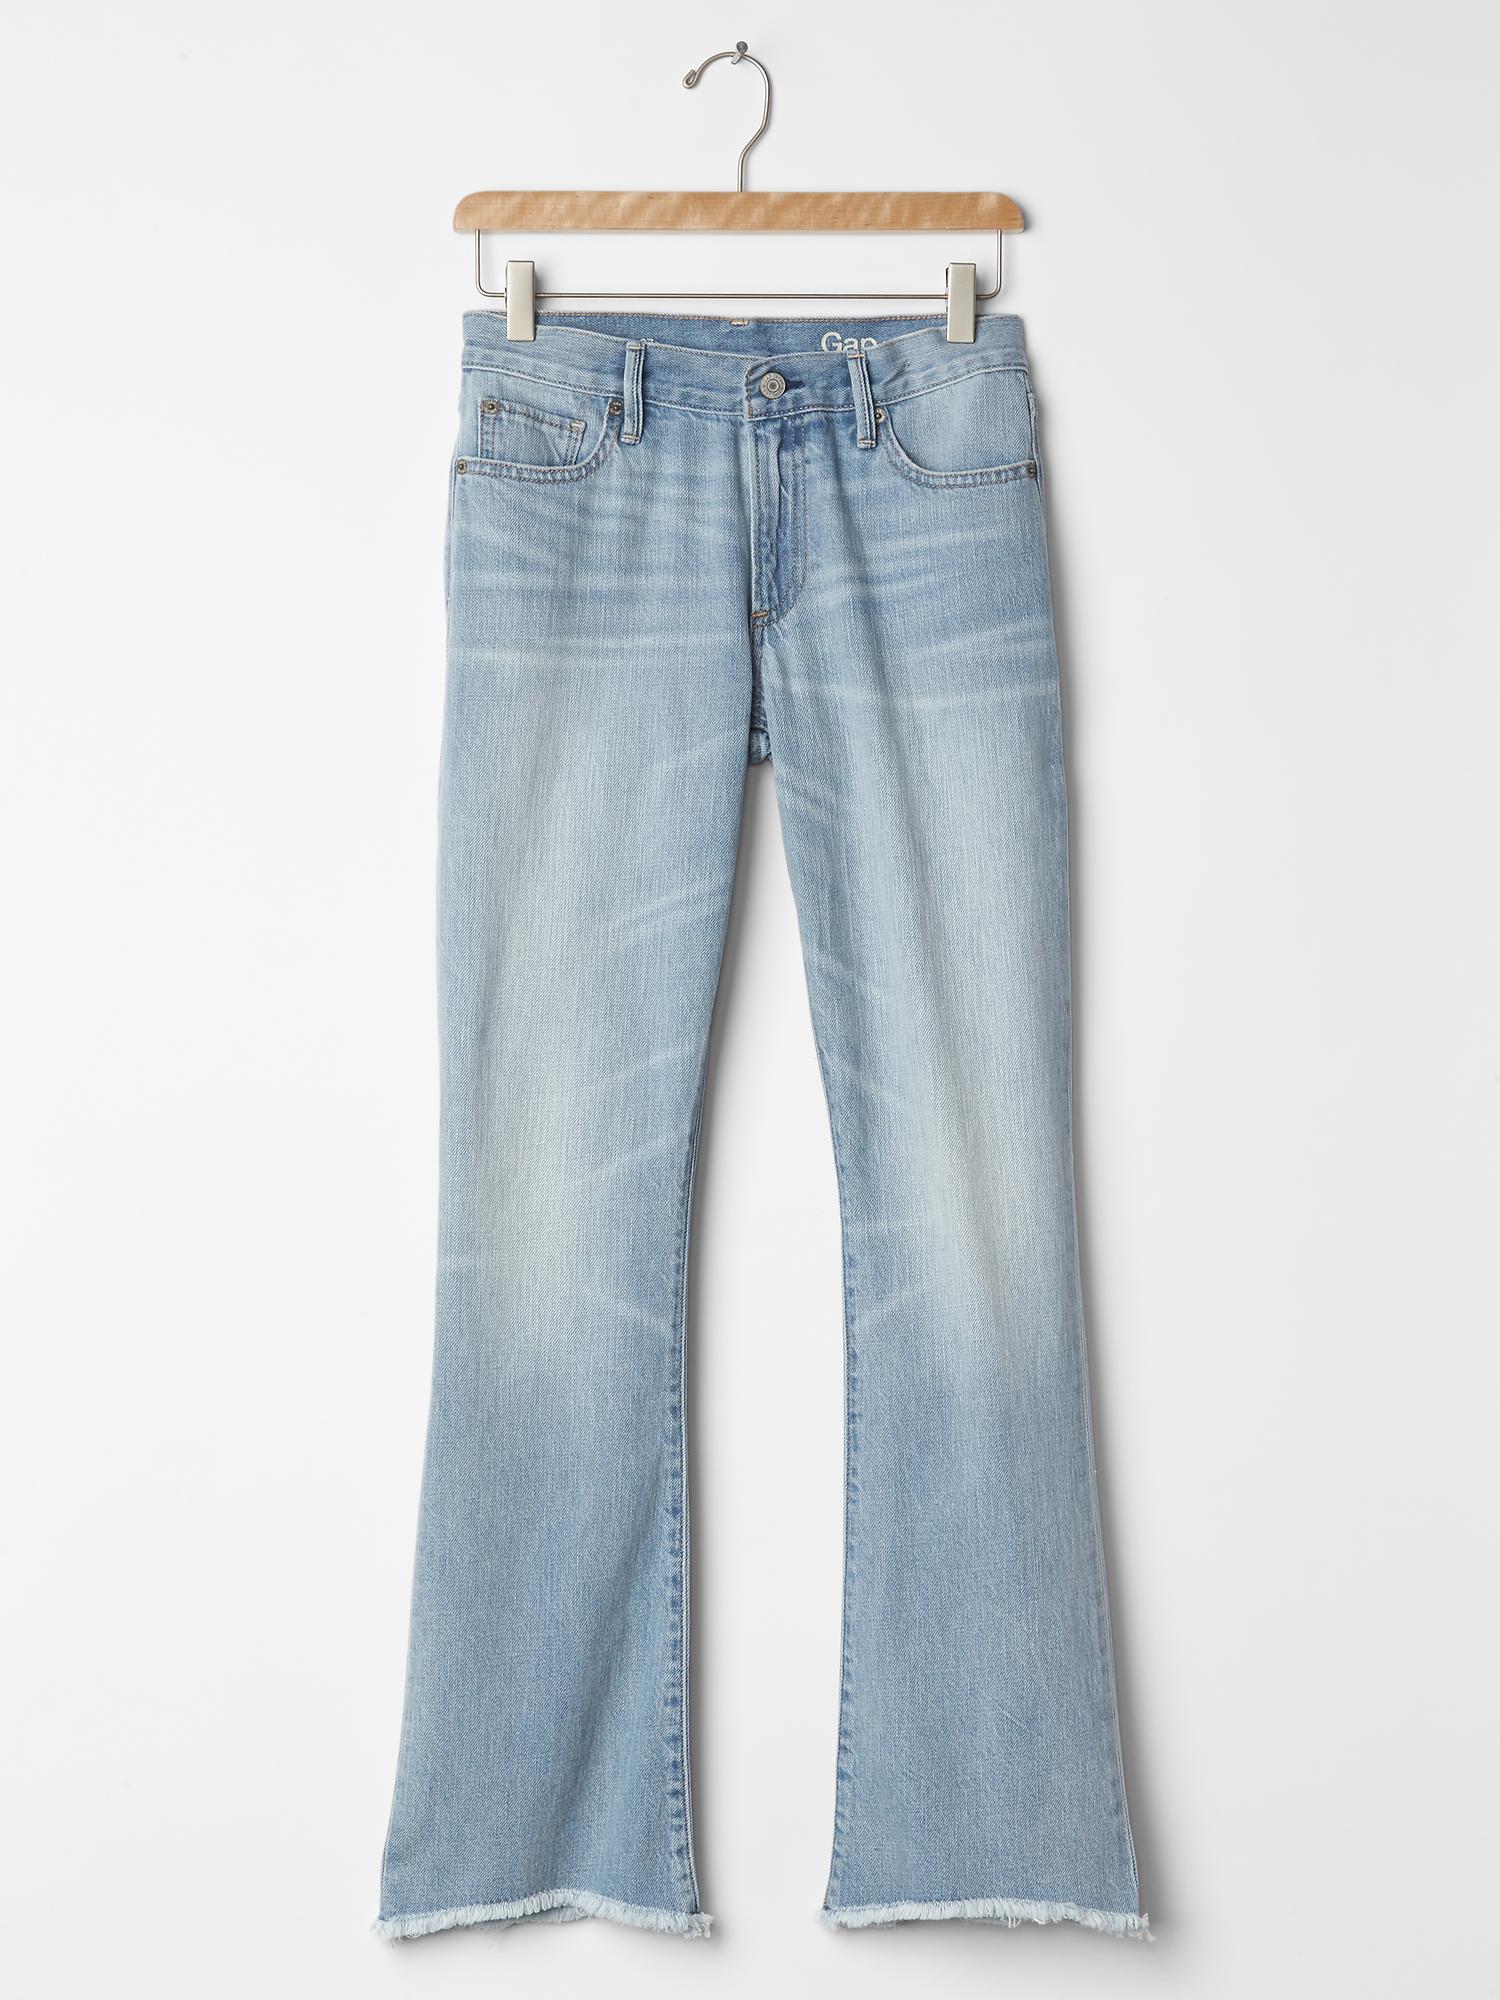 Gap Denim Flare Jeans